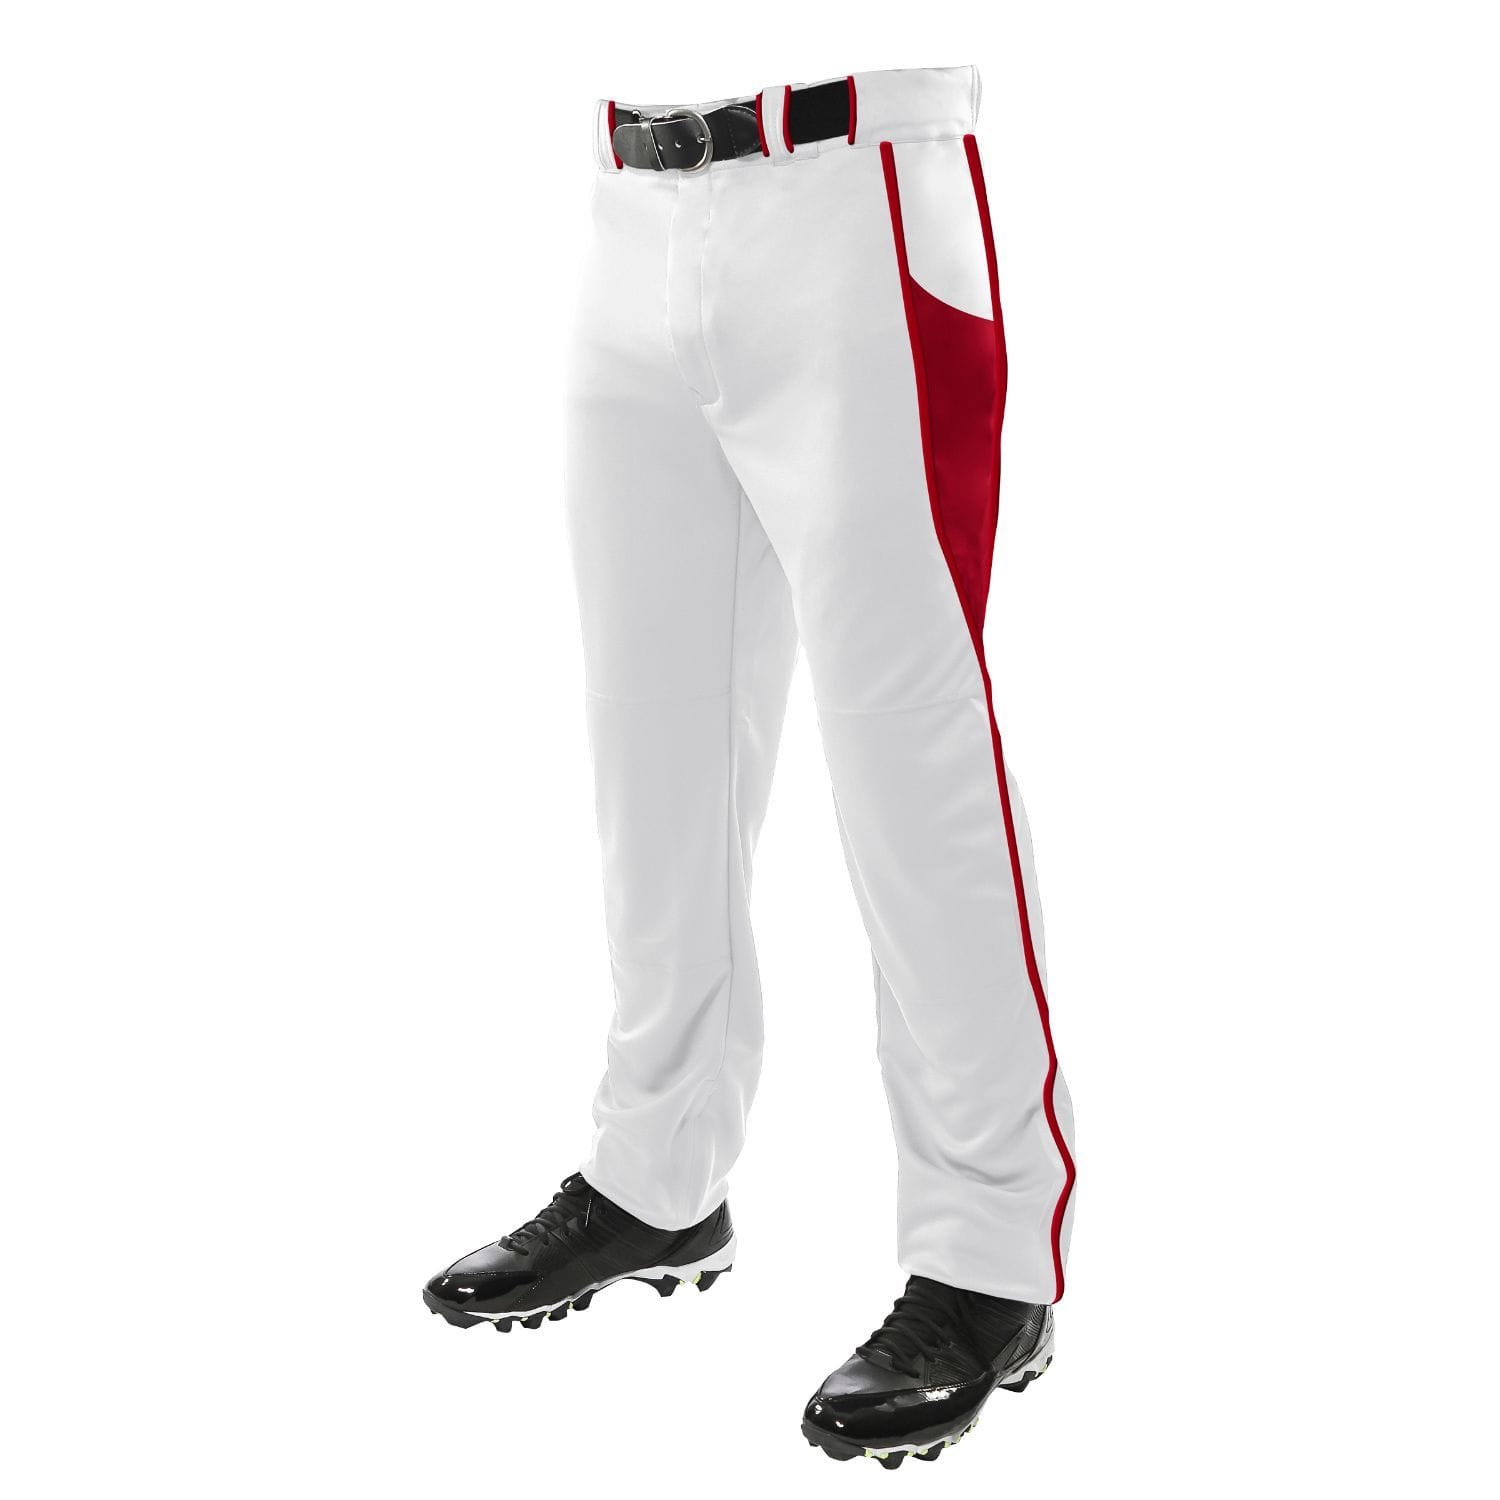 Champro Sports : Baseball Champro Adult Triple Crown Baseball Pant White Scarlet Small